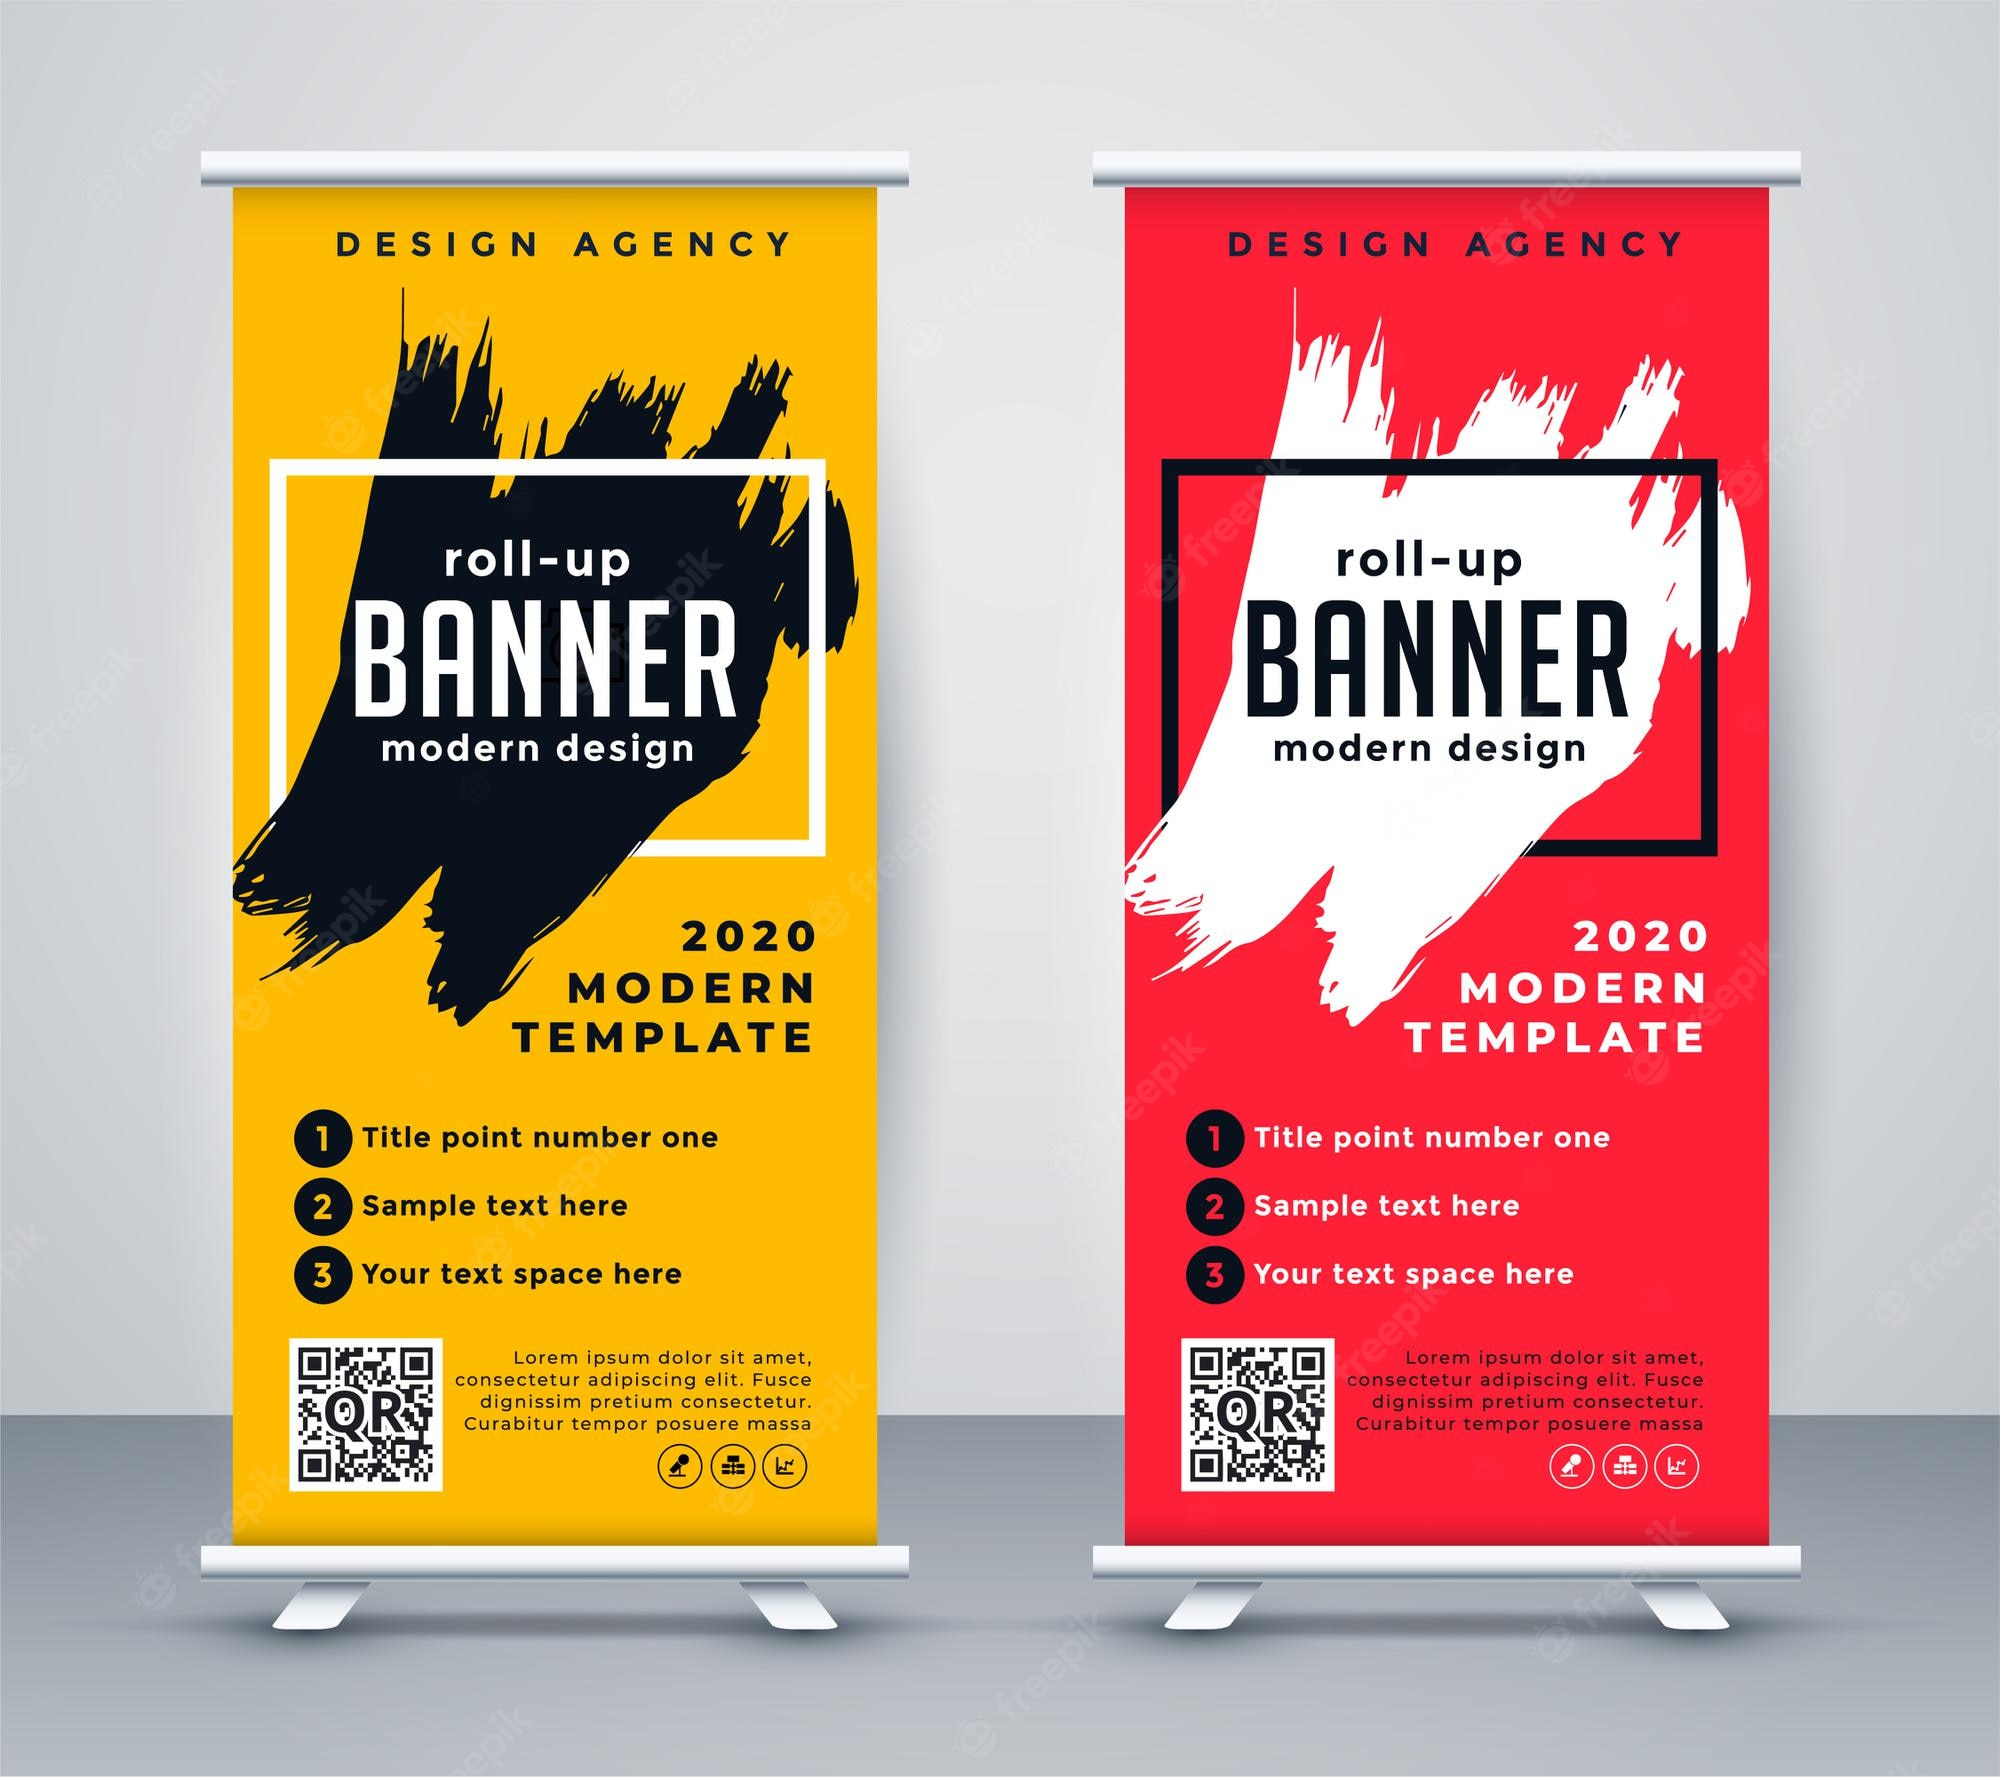 Roll Up Banner Design Images  Free Vectors, Stock Photos & PSD Regarding Pop Up Banner Design Template